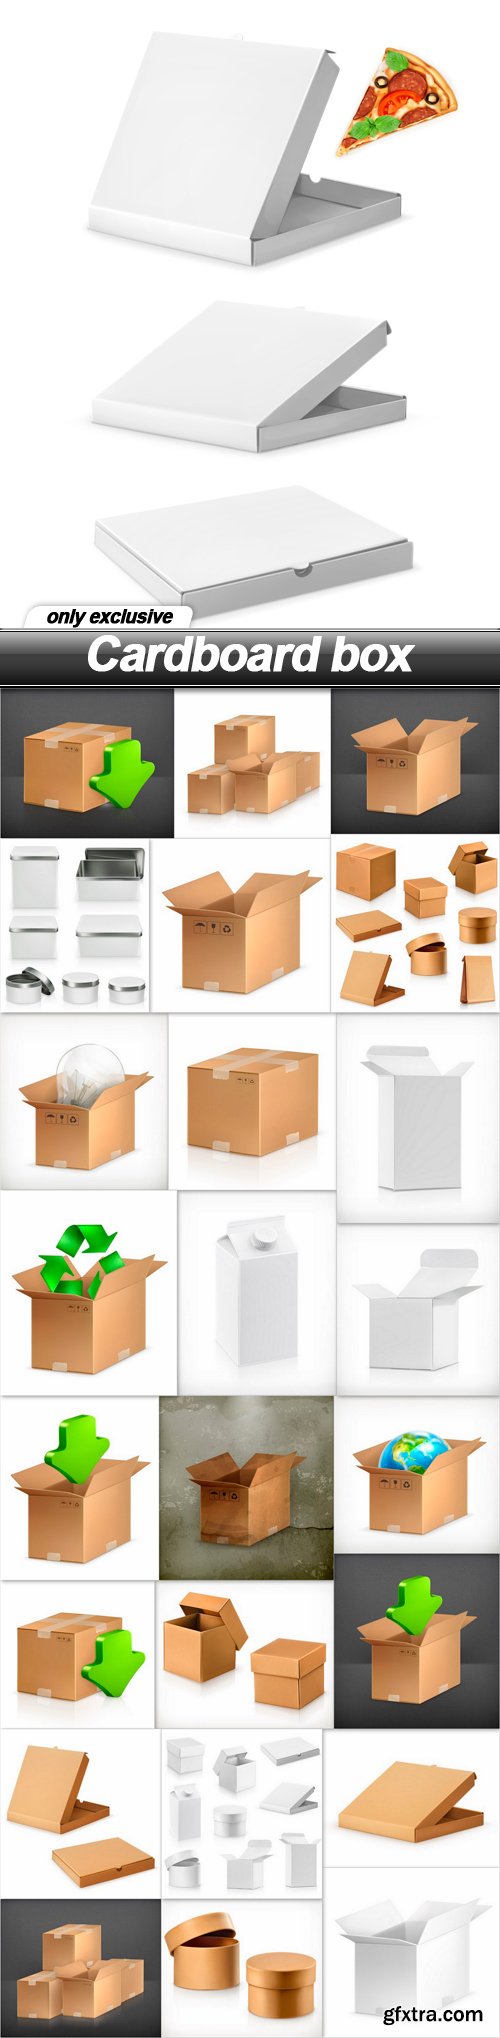 Cardboard box - 25 EPS